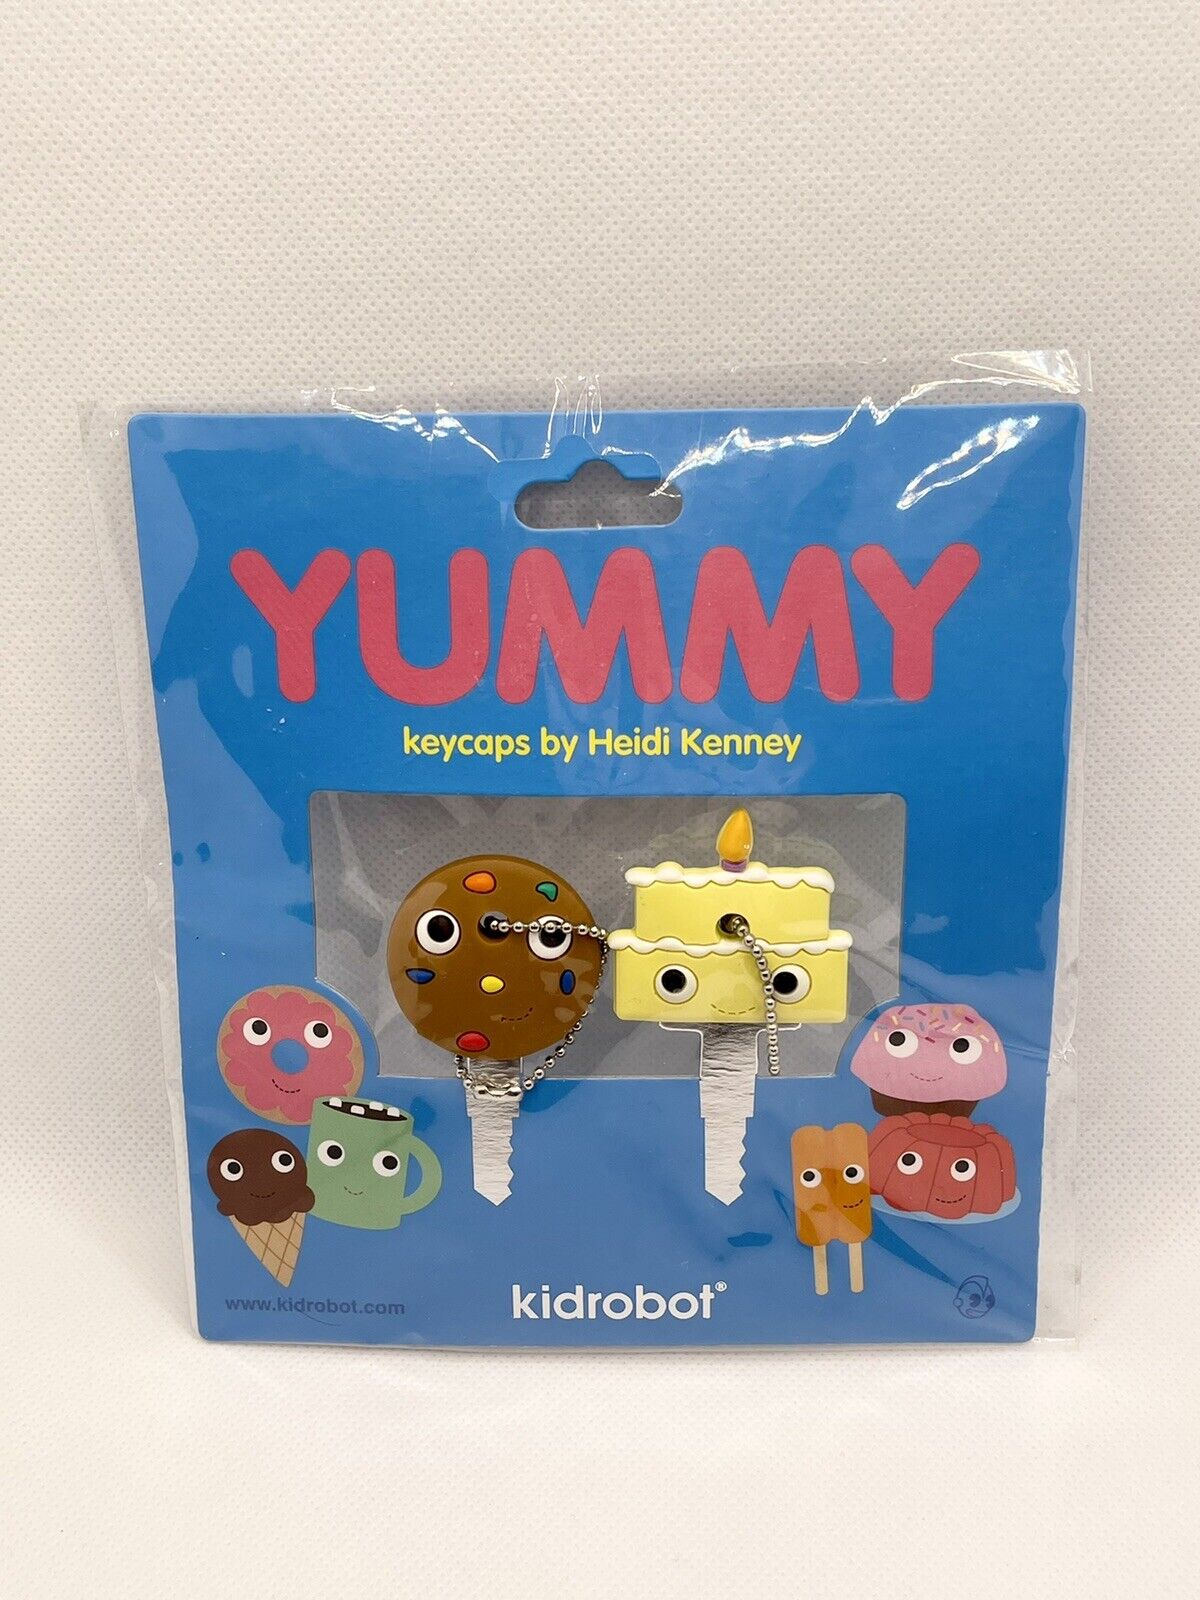 Kidrobot Yummy World Heidi Kenney Keycap Covers Yellow Cake & Rainbow Cookie NEW